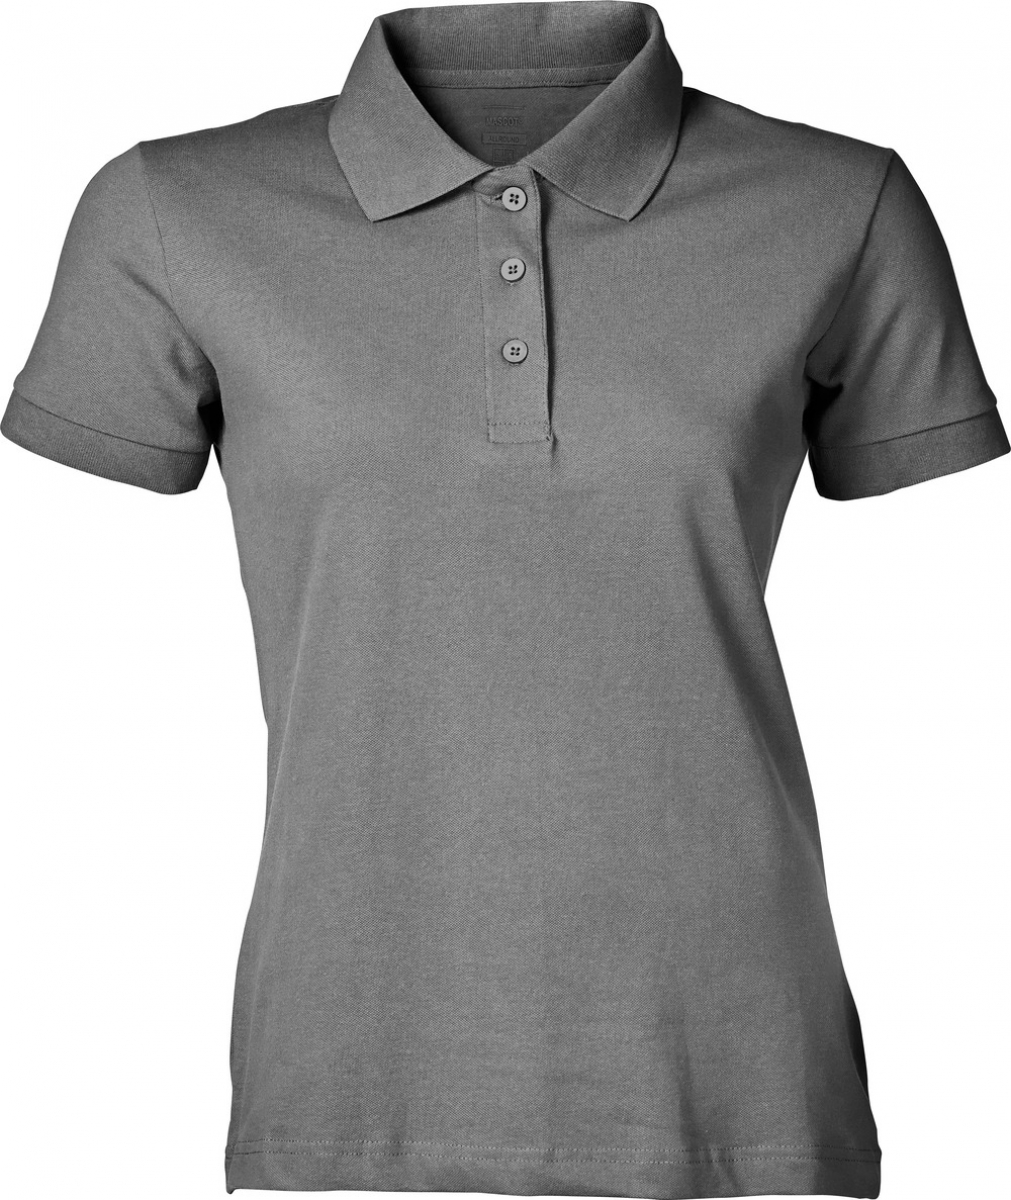 MASCOT-Worker-Shirts, Damen-Polo-Shirt, Grasse, 220 g/m, anthrazit